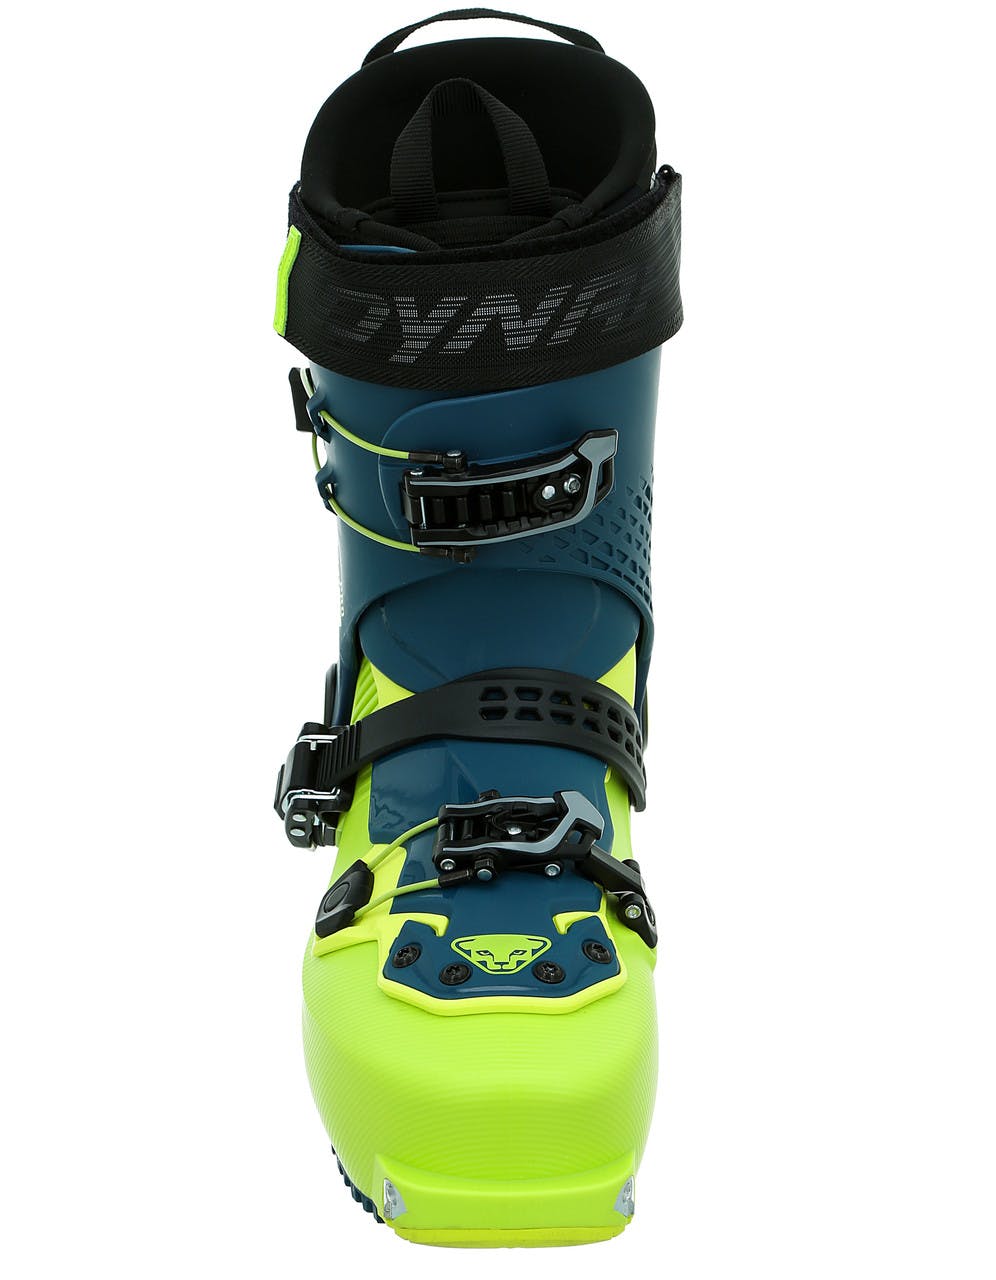 Radical Pro Ski Boots Petrol/Lime Punch